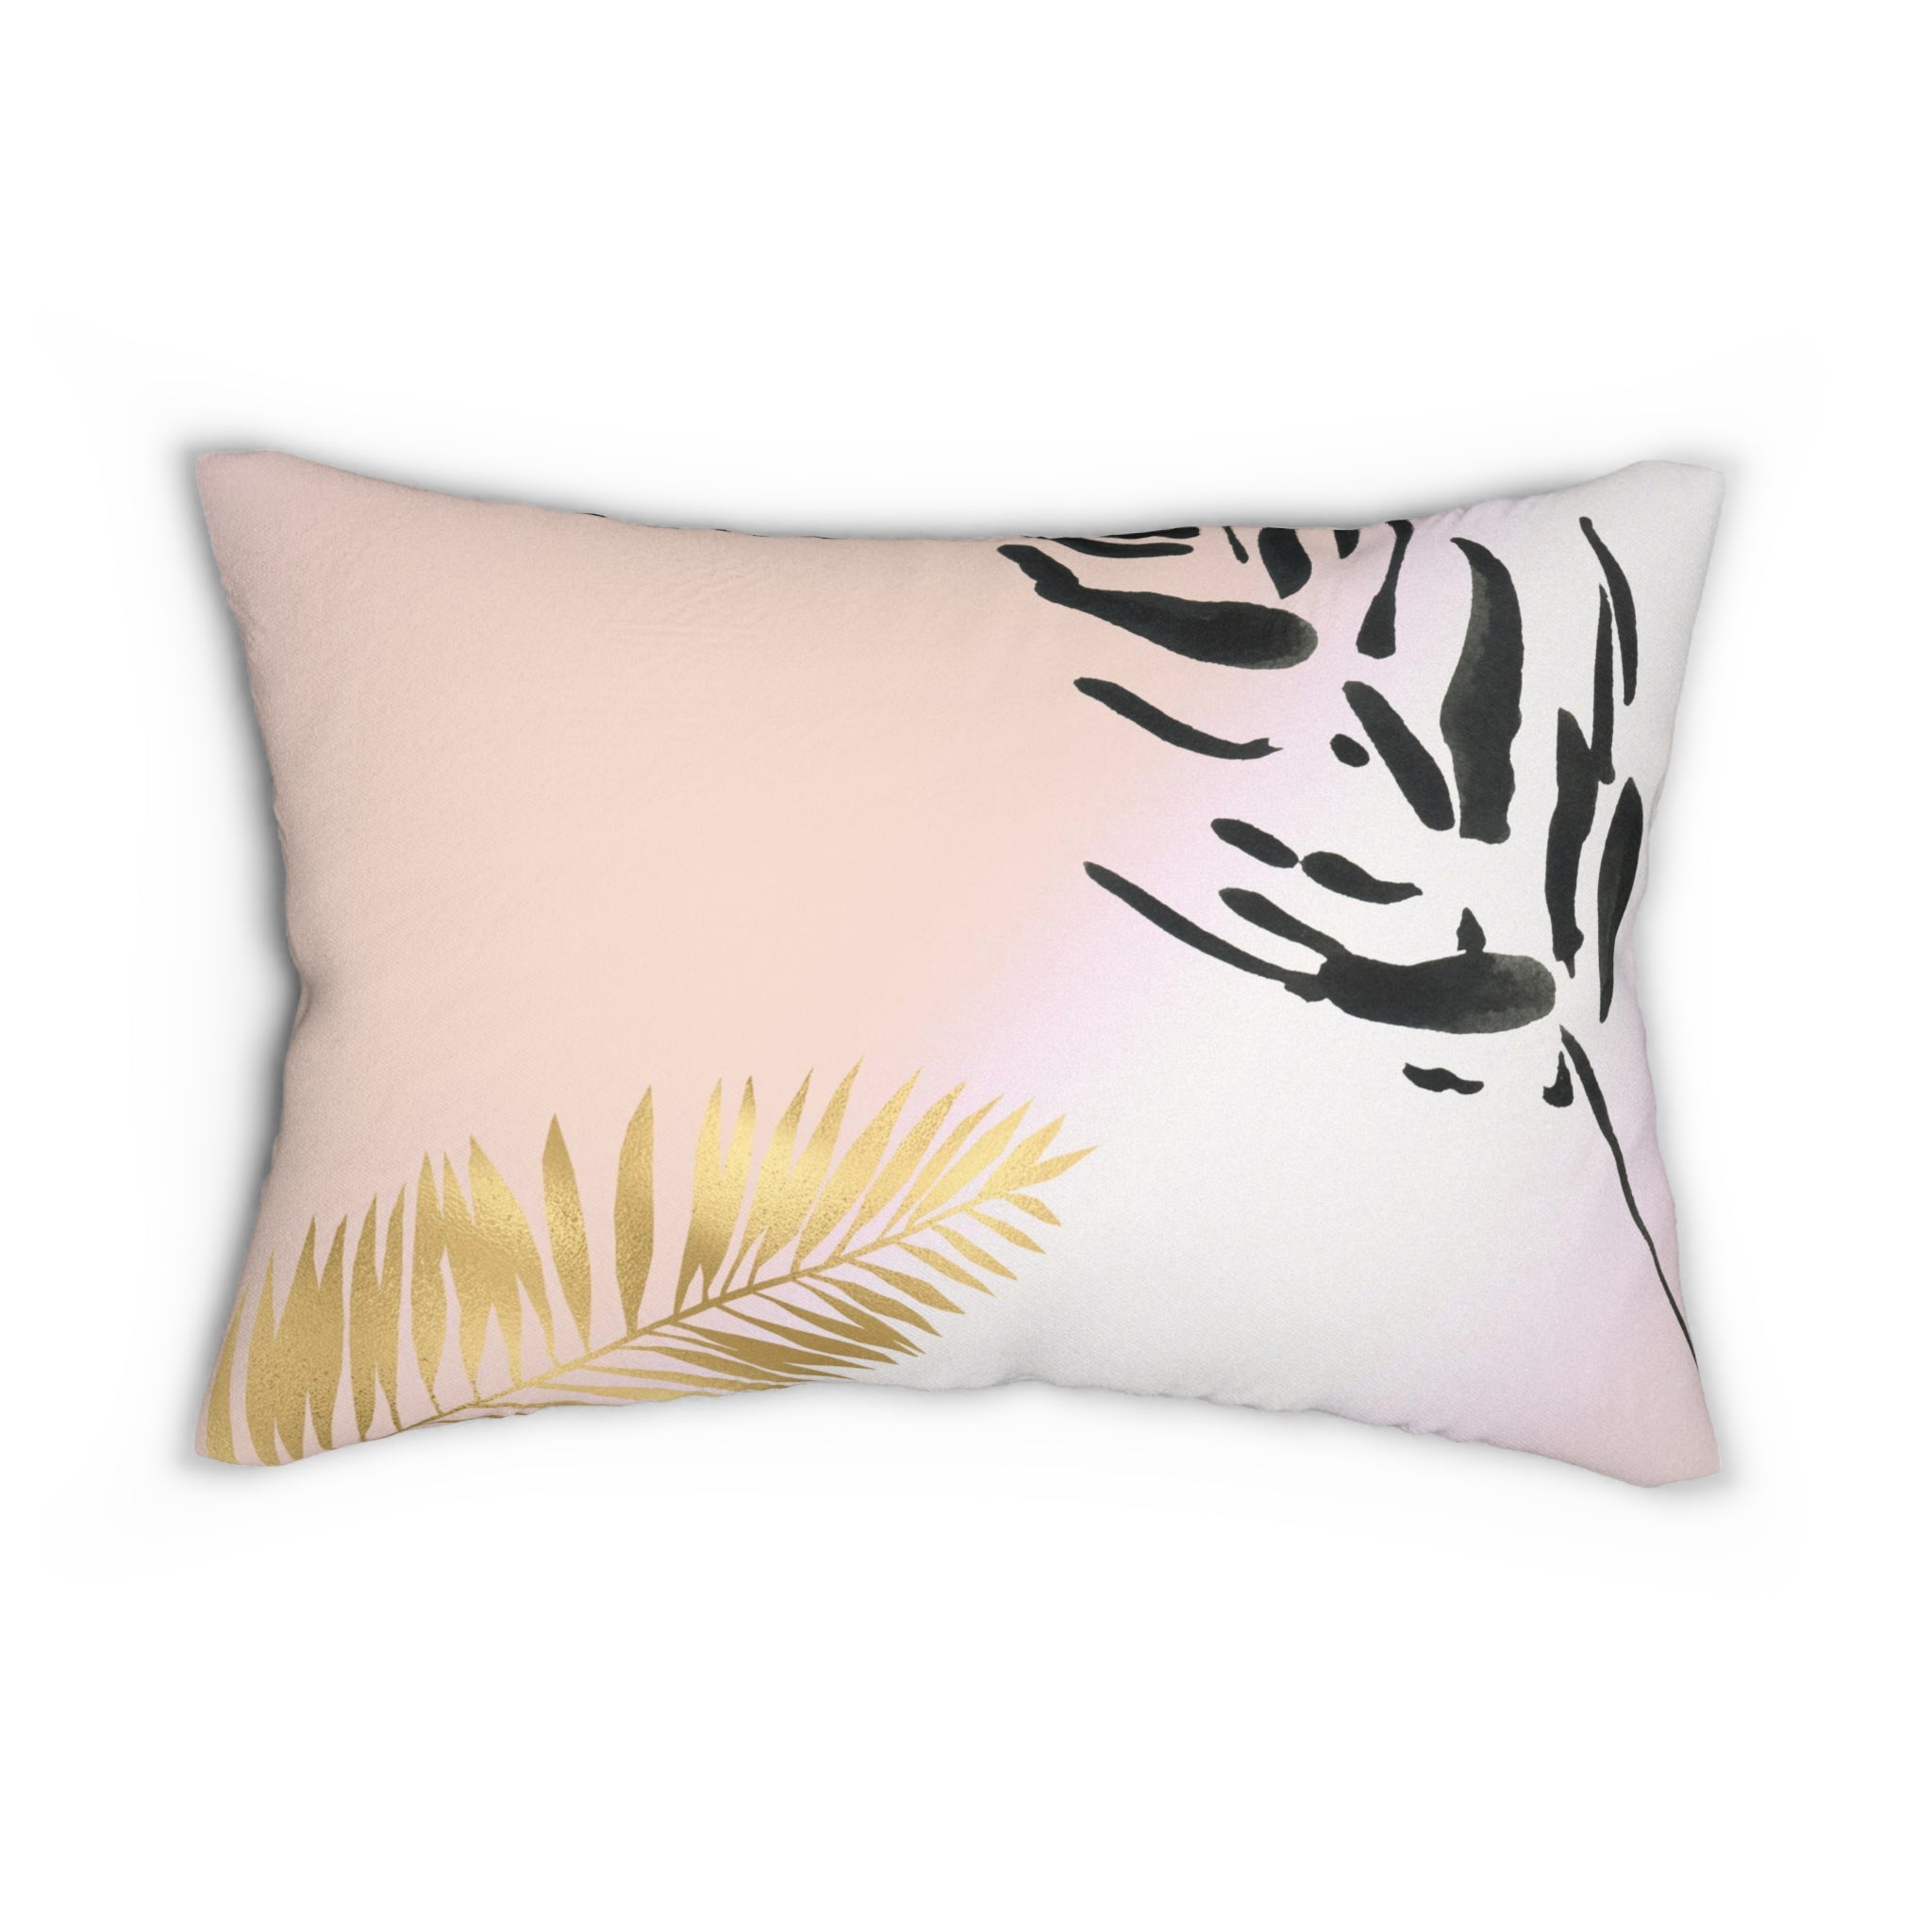 Floral Lumbar Pillow | Pastel White Lavender, Gold Black